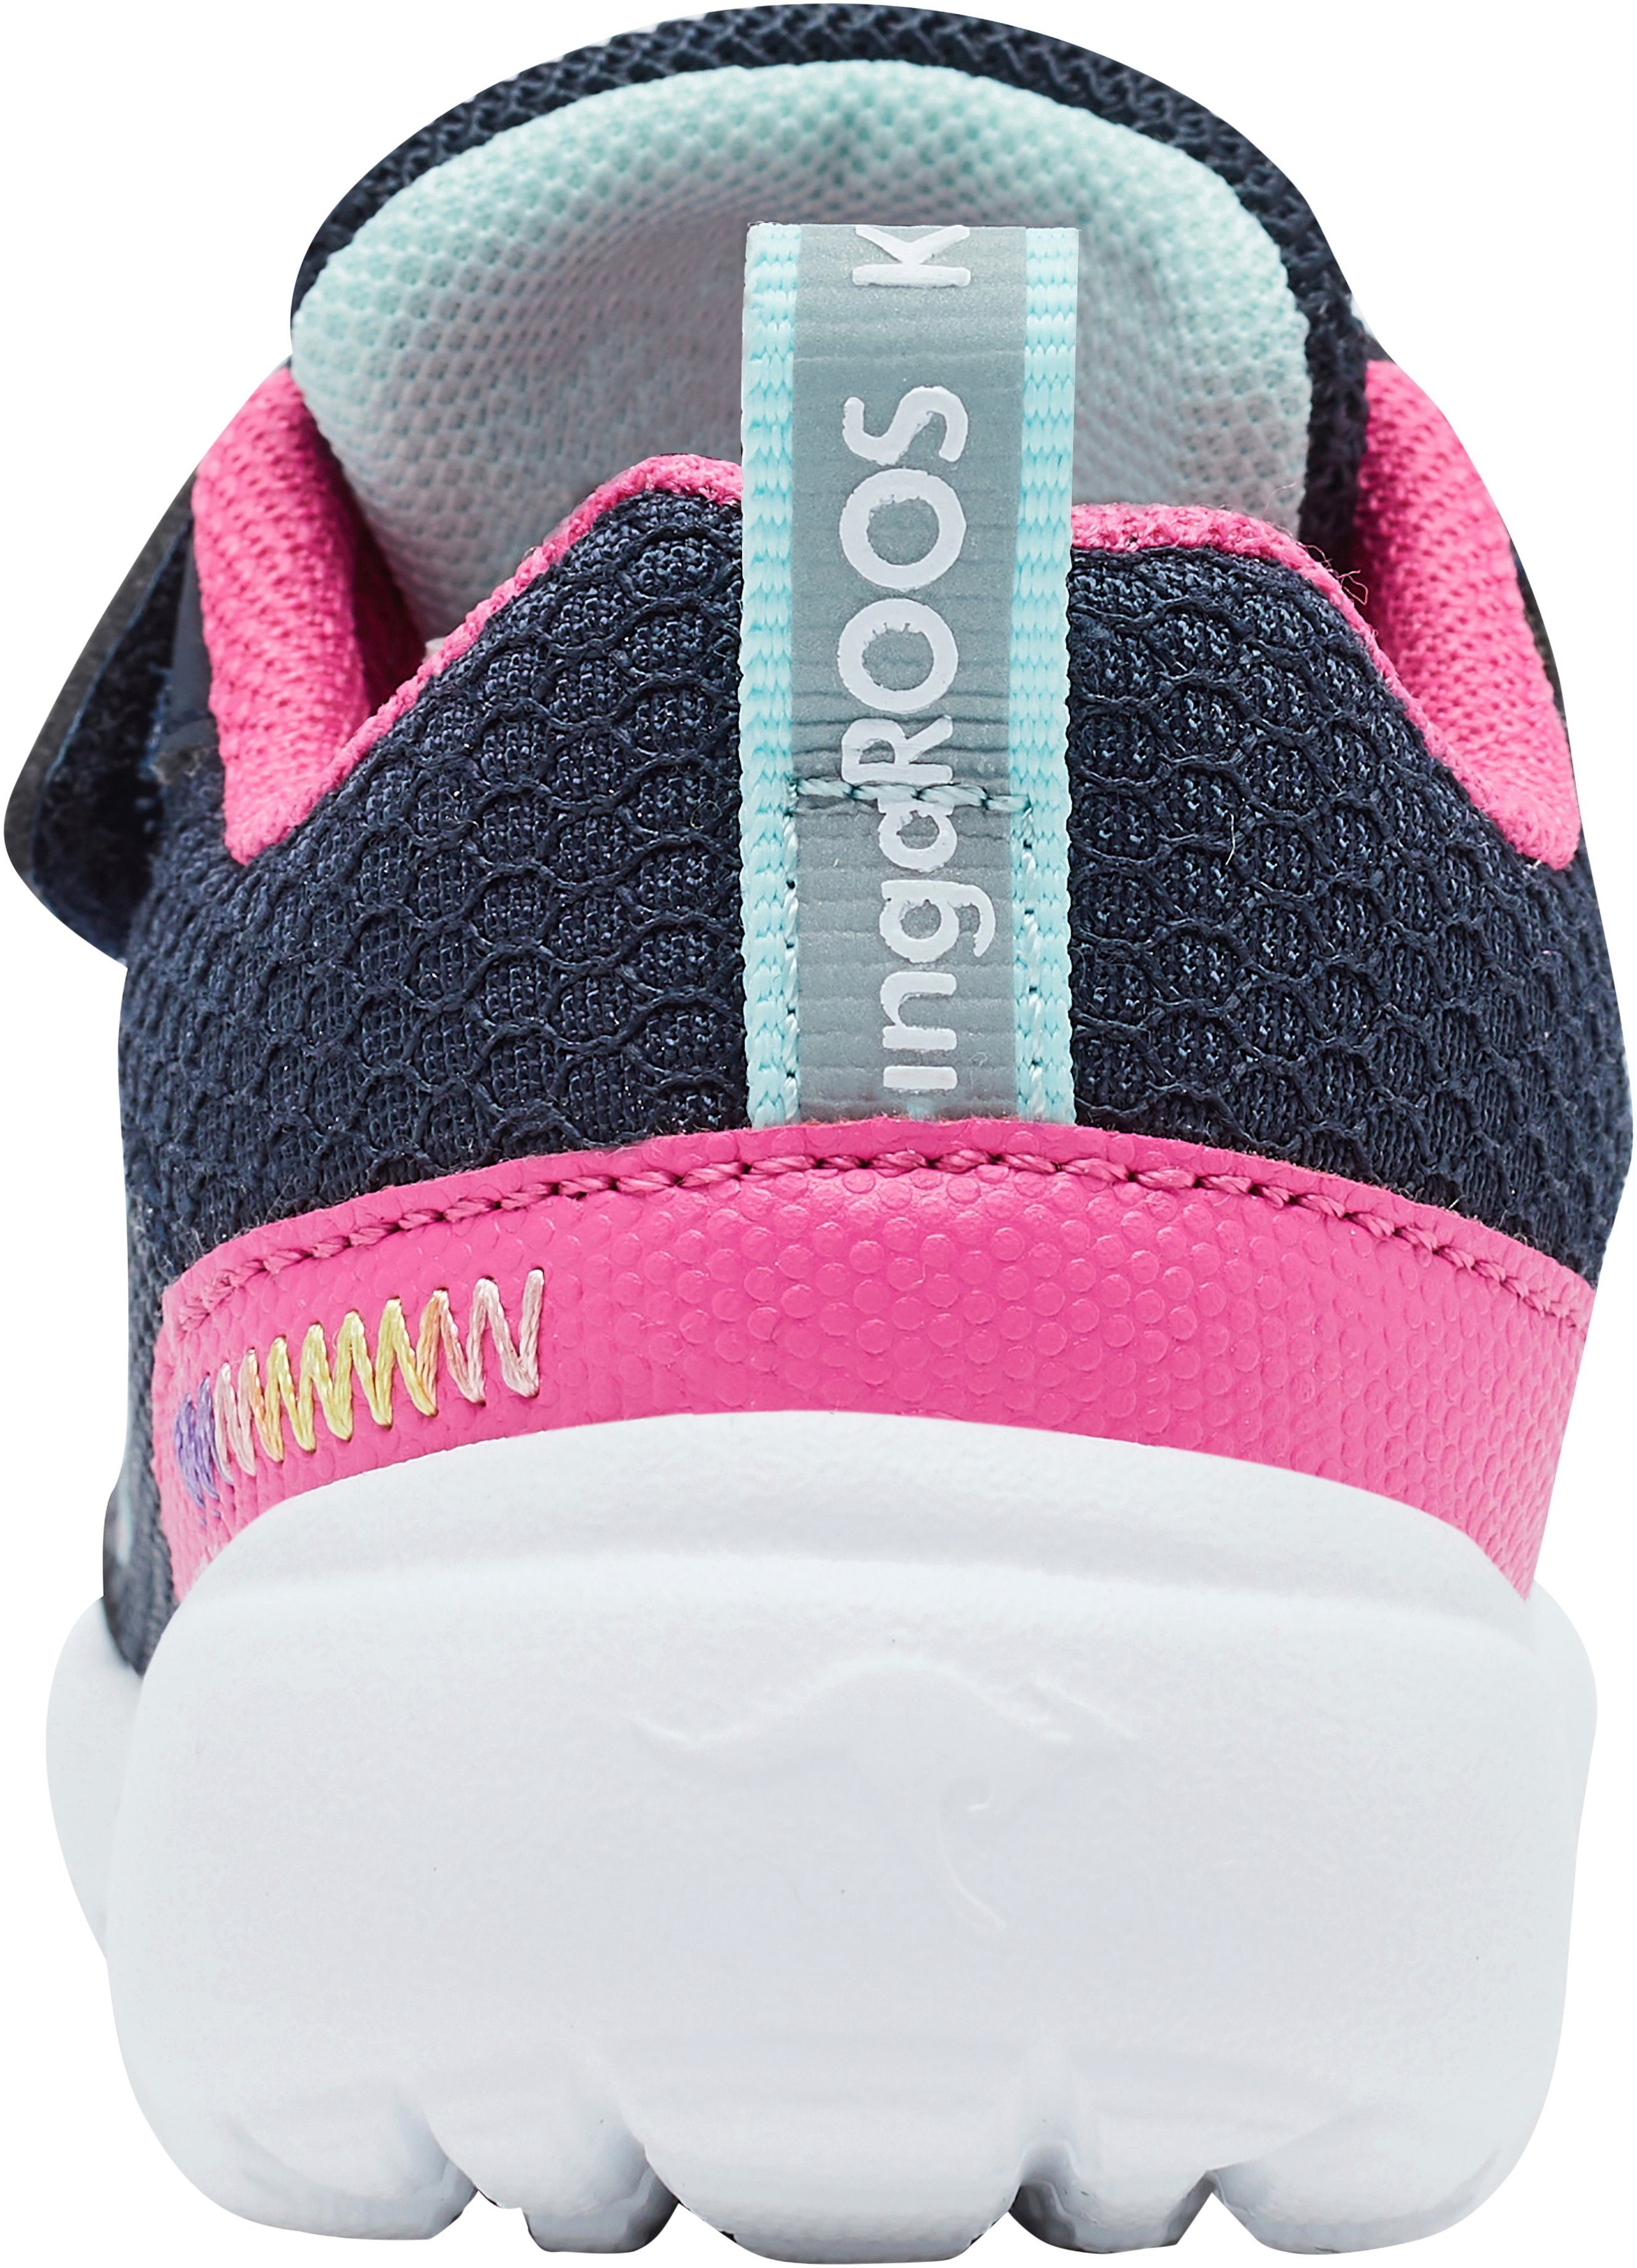 mit navy-pink EV Klettverschluss KY-Lilo KangaROOS Sneaker